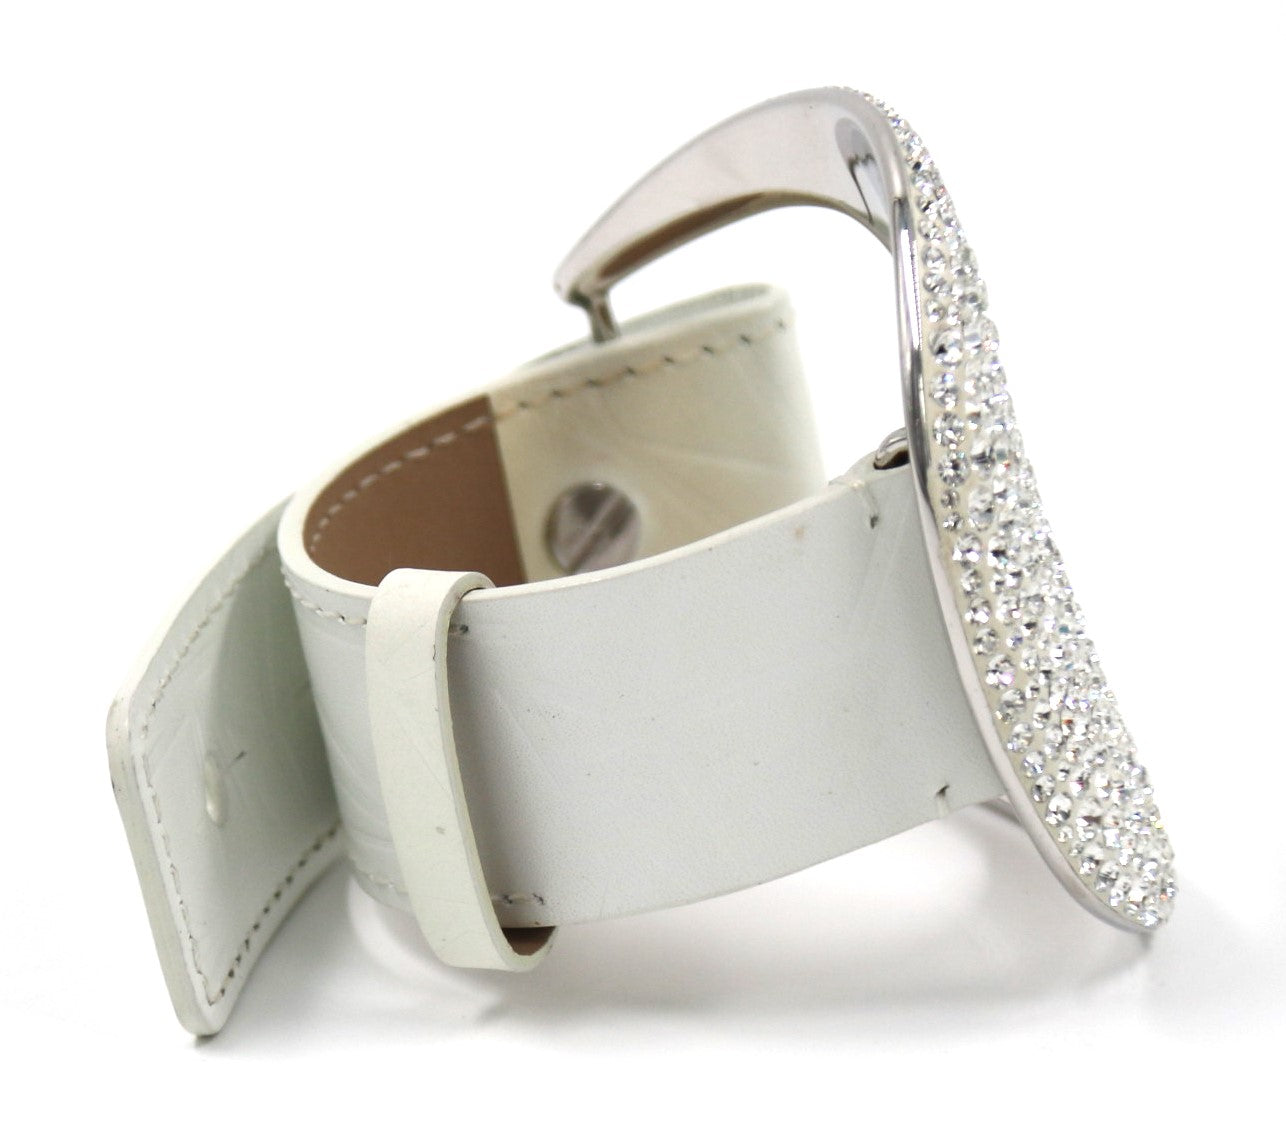 SWAROVSKI White leather Bracelet with Swarovski embellished brooch